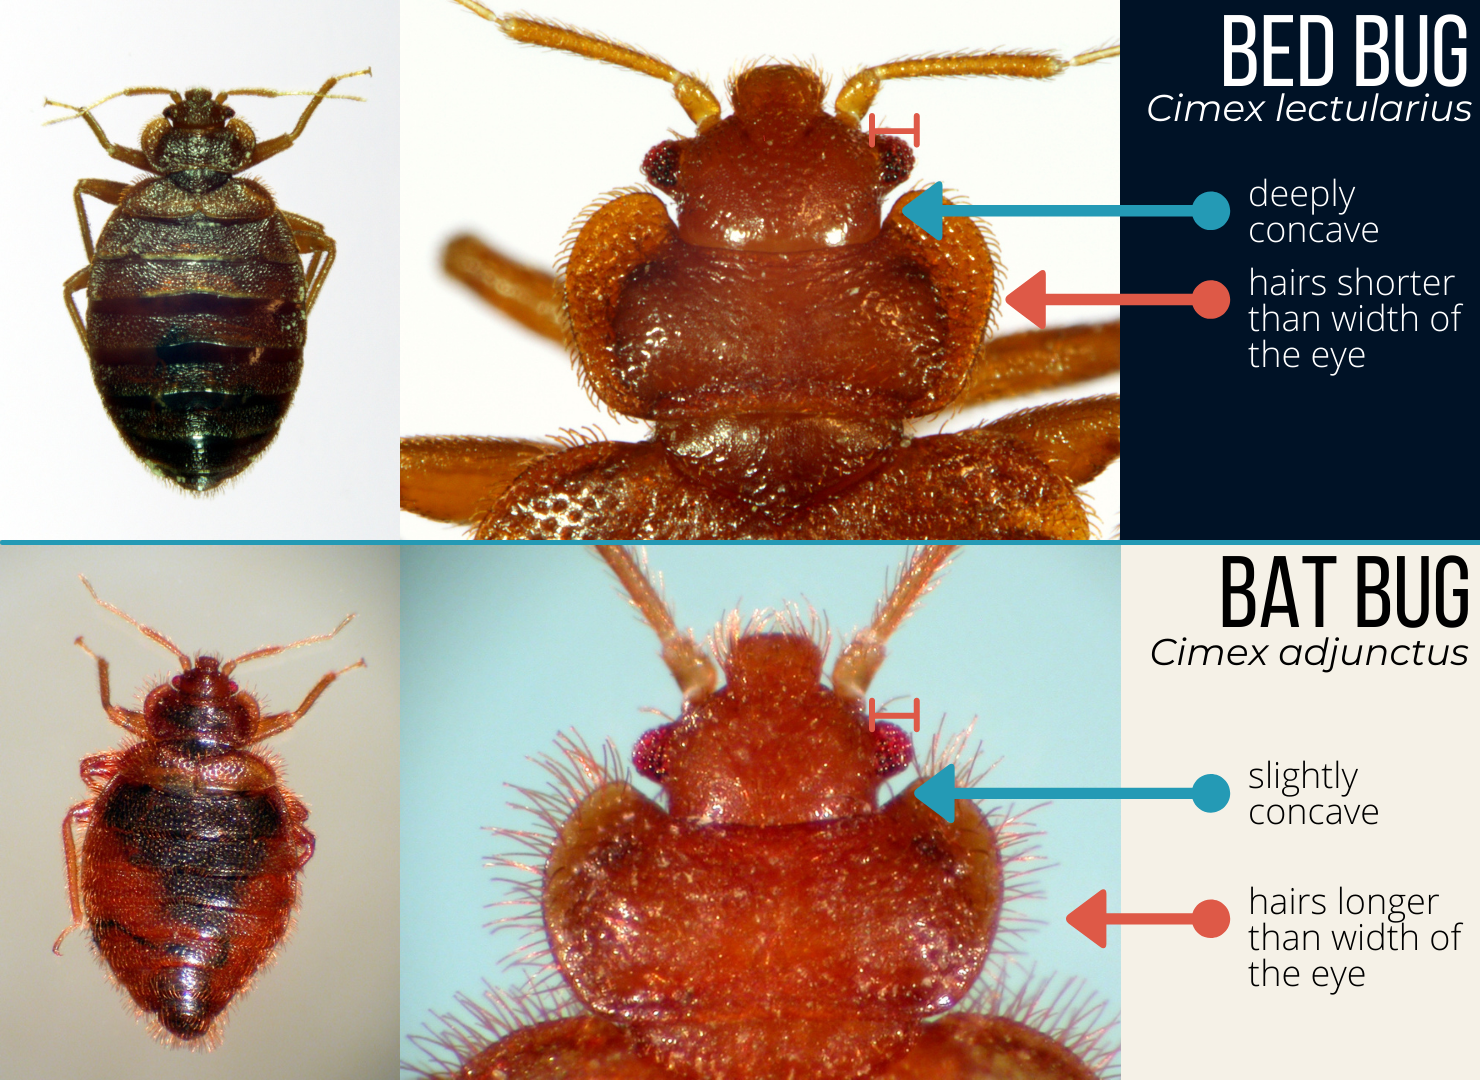 bed bug vs. bat bug